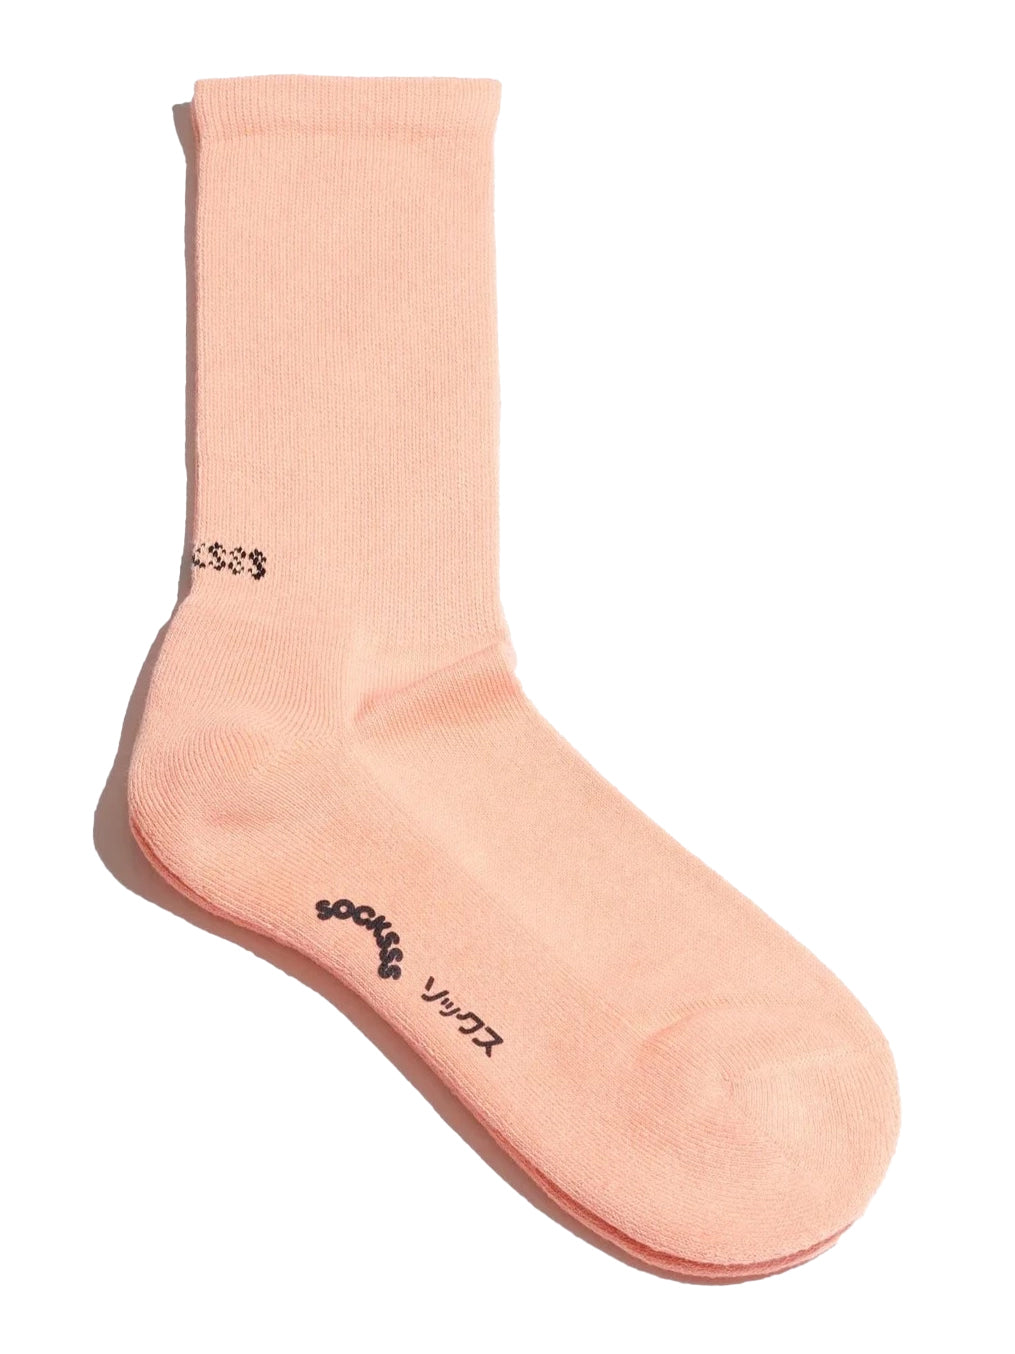 'Cherry Peach' socks